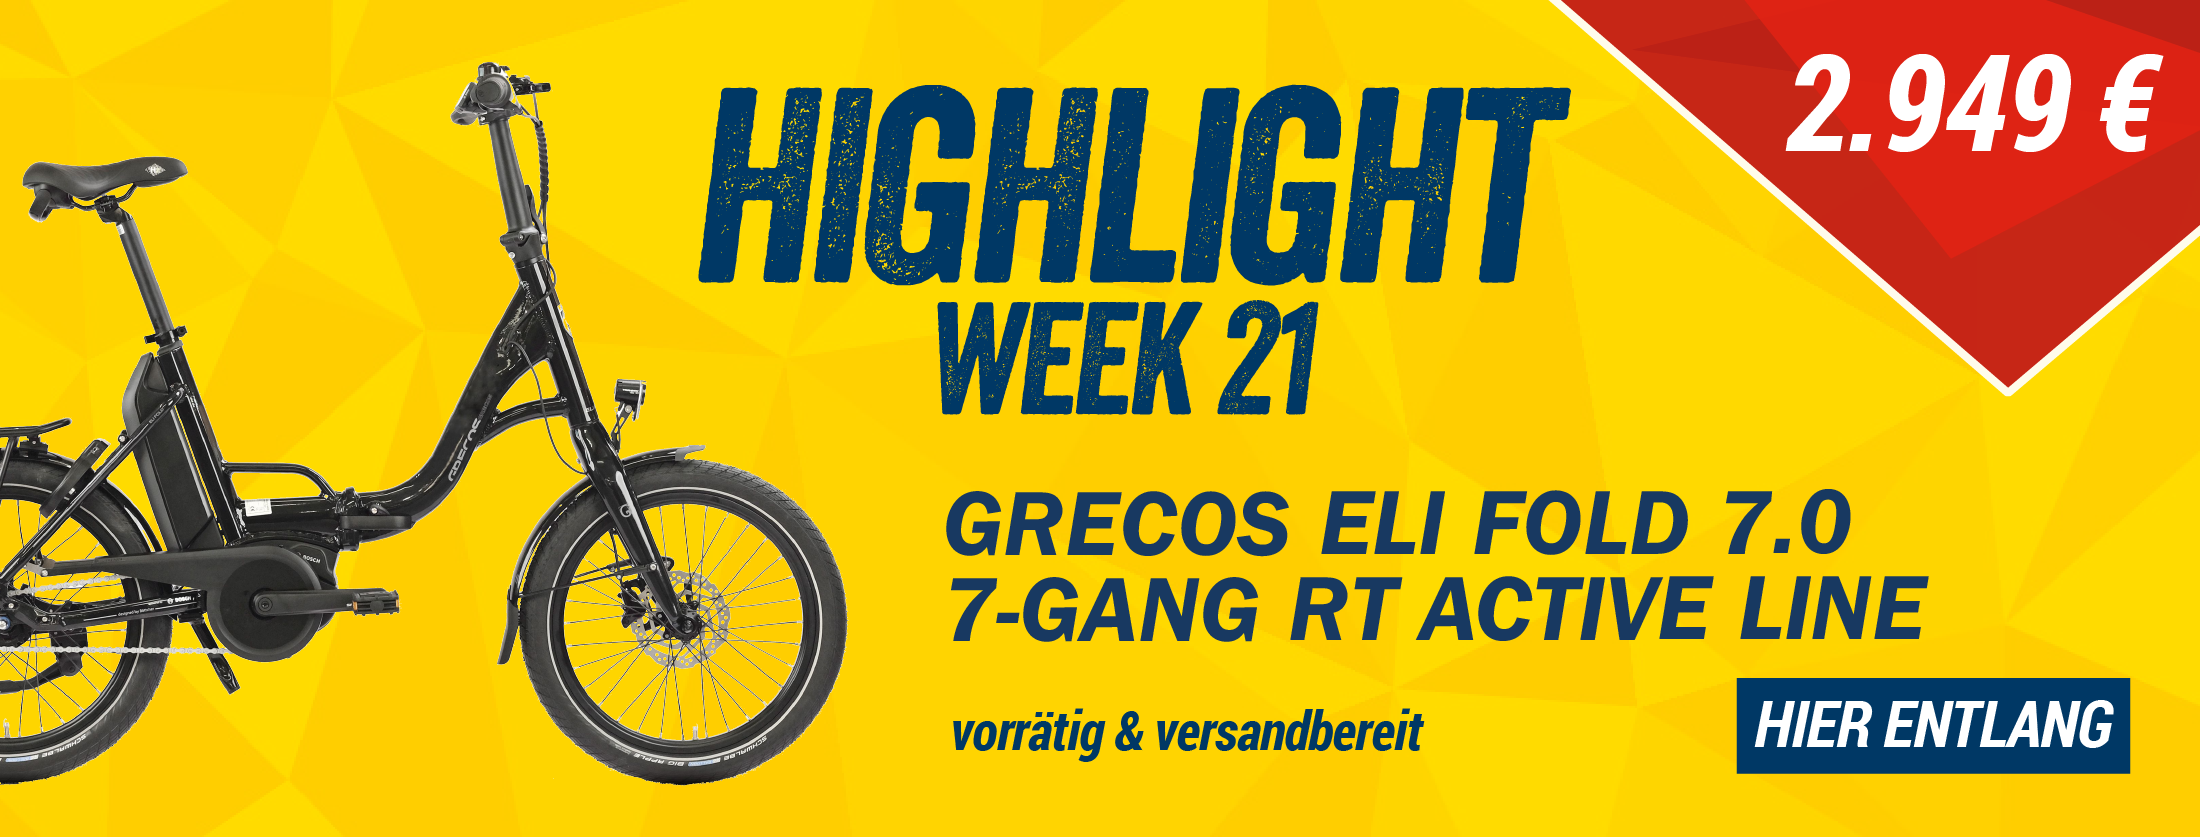 Highlight der Woche Grecos Eli Fold im Bike Market